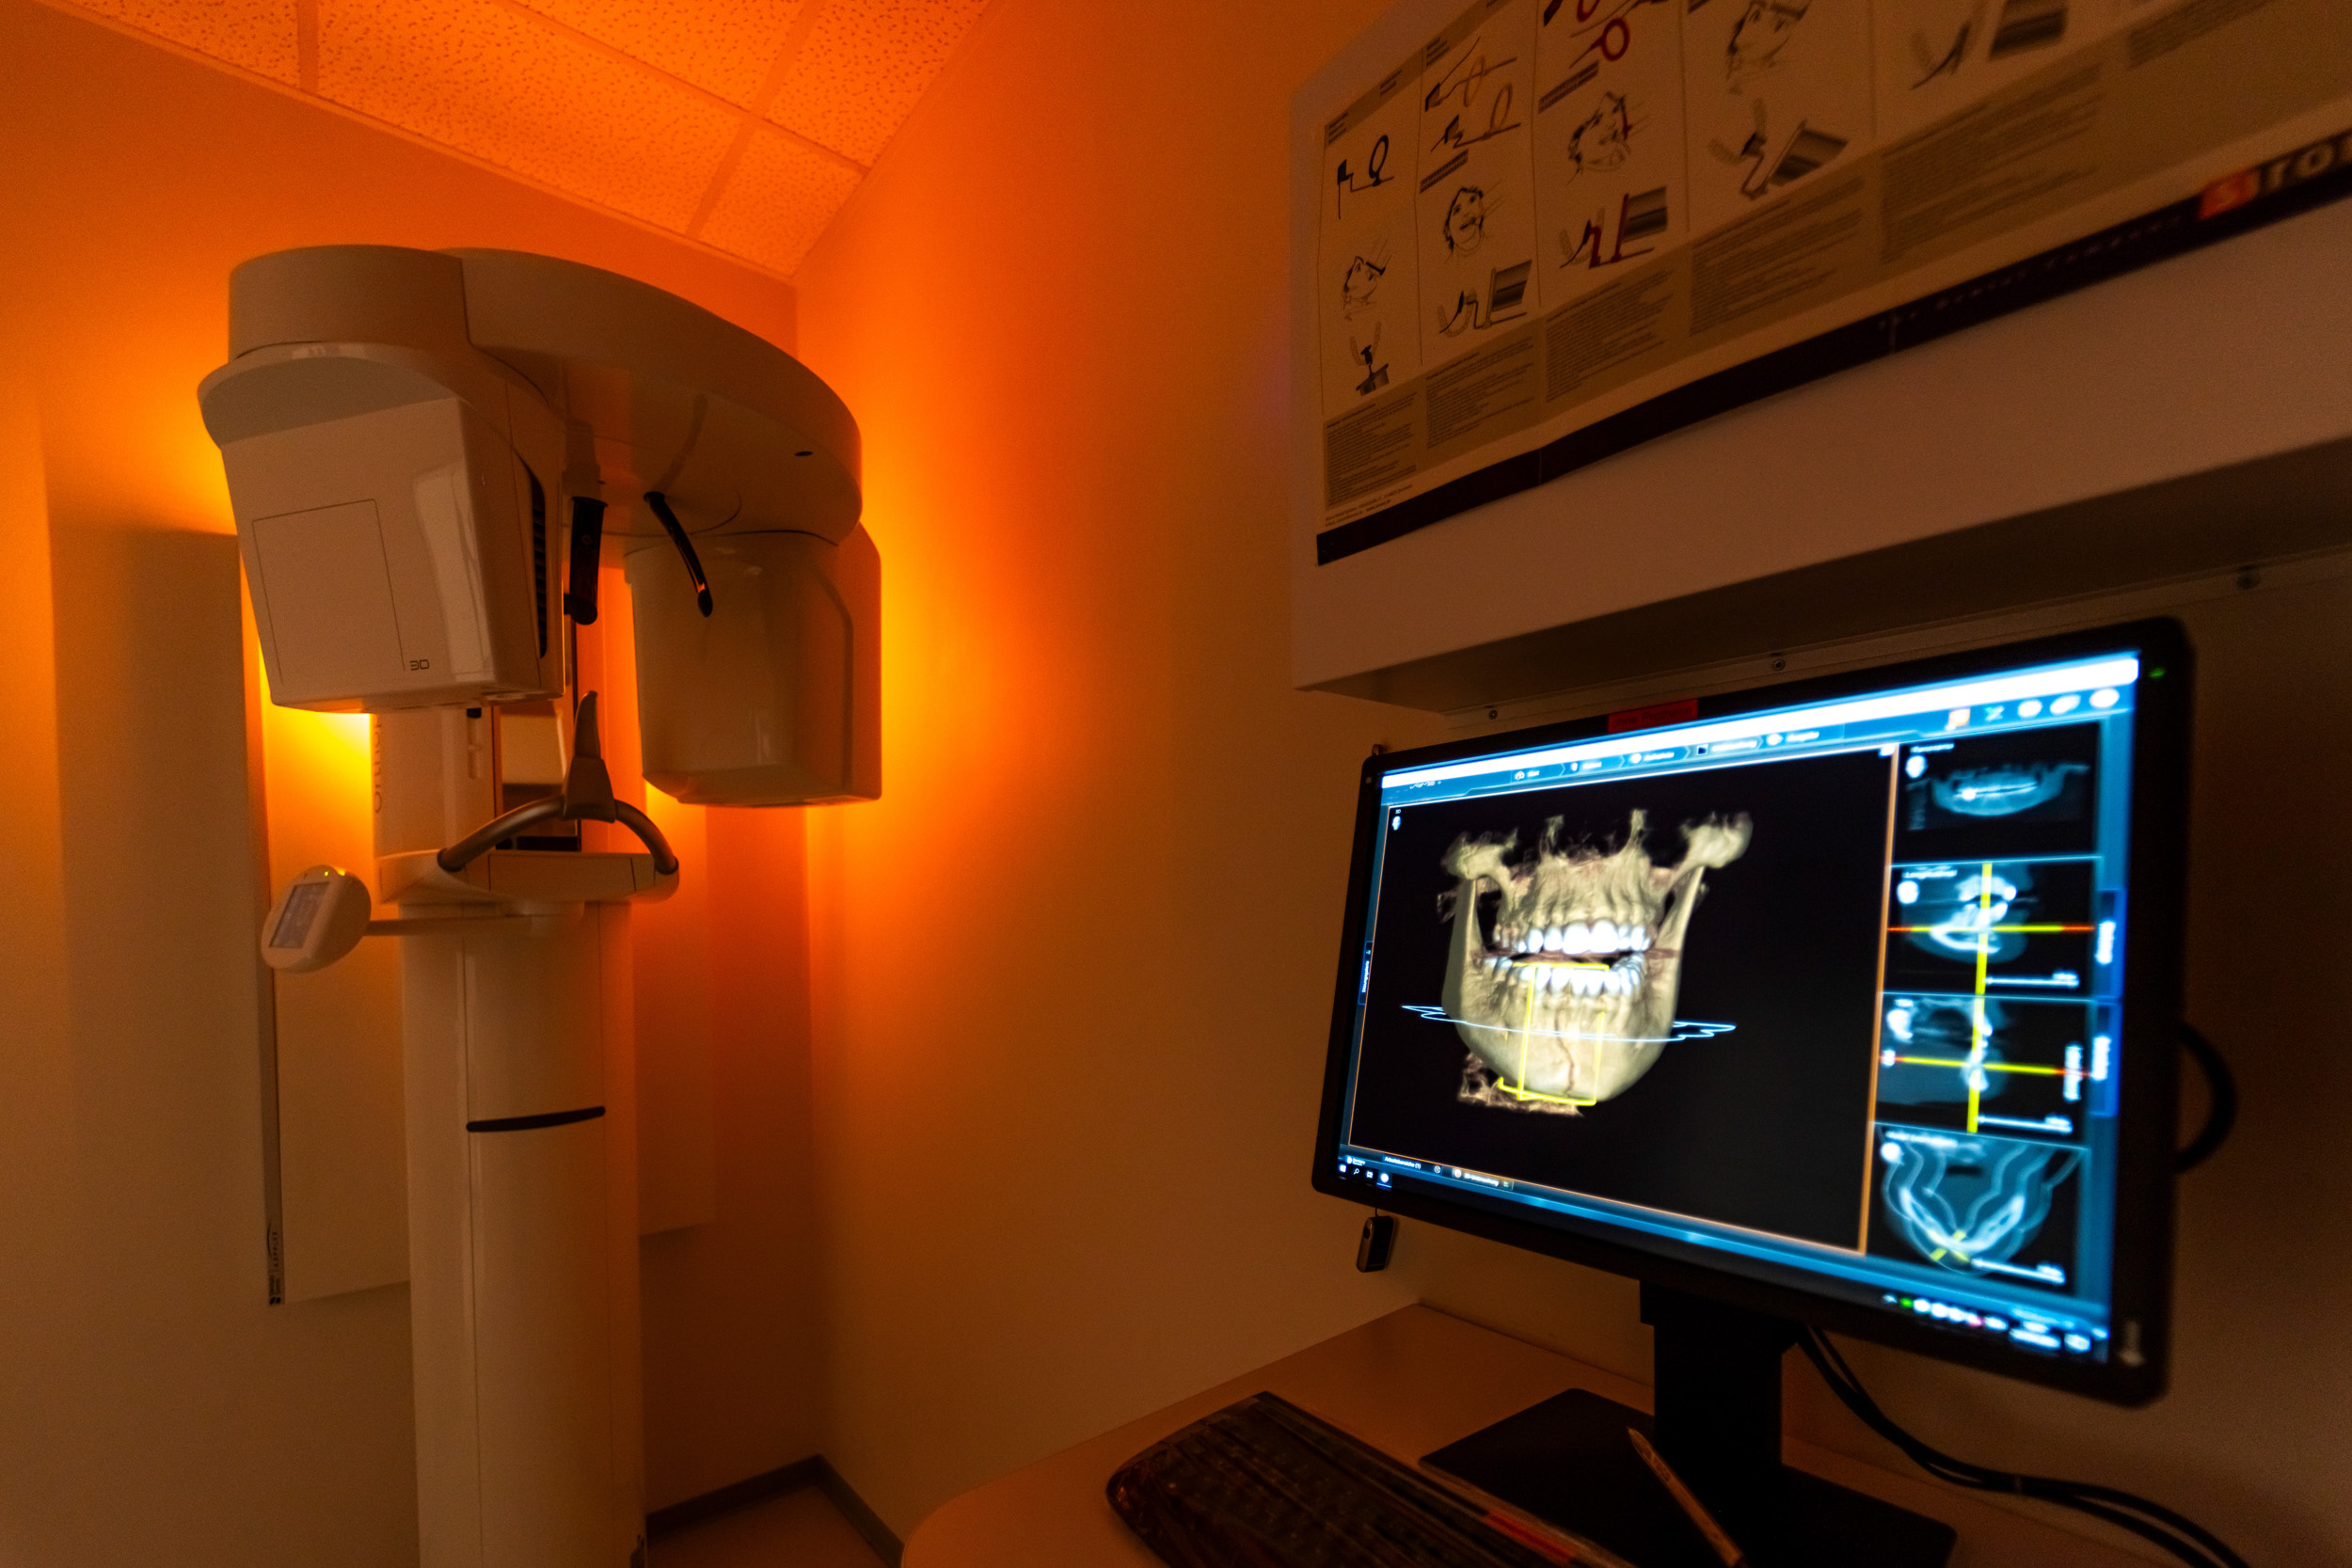 3d röntgen zahnarzt, röntgenbild zähne, zähne röntgen, röntgen zähne, röntgen zähne, 3d-röntgen zahnarzt kosten krankenkasse, 3d röntgen, 3d röntgen zahnarzt kosten, kosten 3d röntgen zahnarzt, röntgen digital zahnarzt, digitale röntgen zahnarzt,